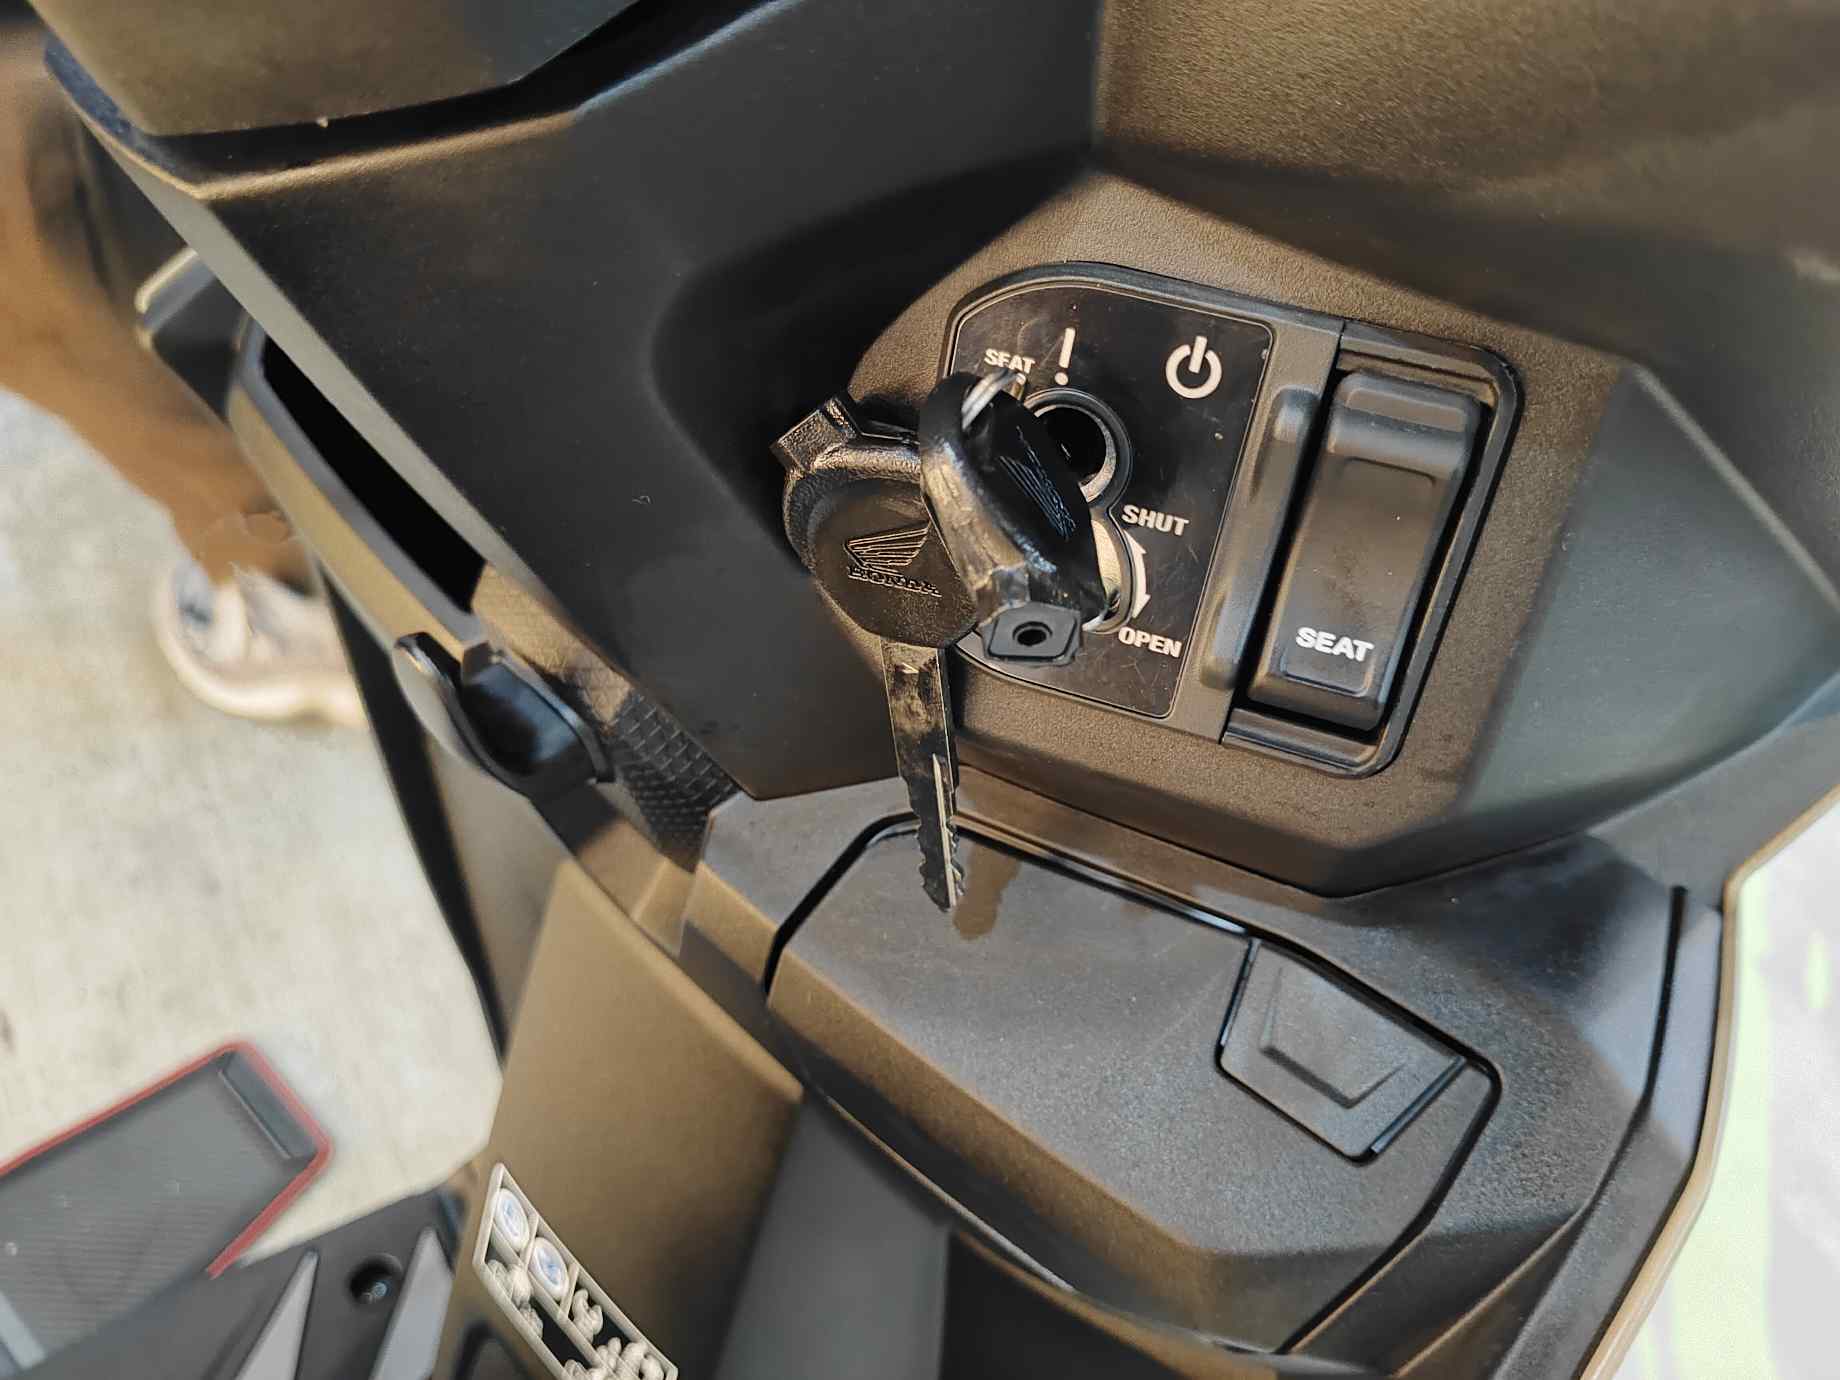 Nggak Usah Bingung, Ini Cara Aktifkan Alarm di All New Honda BeAT